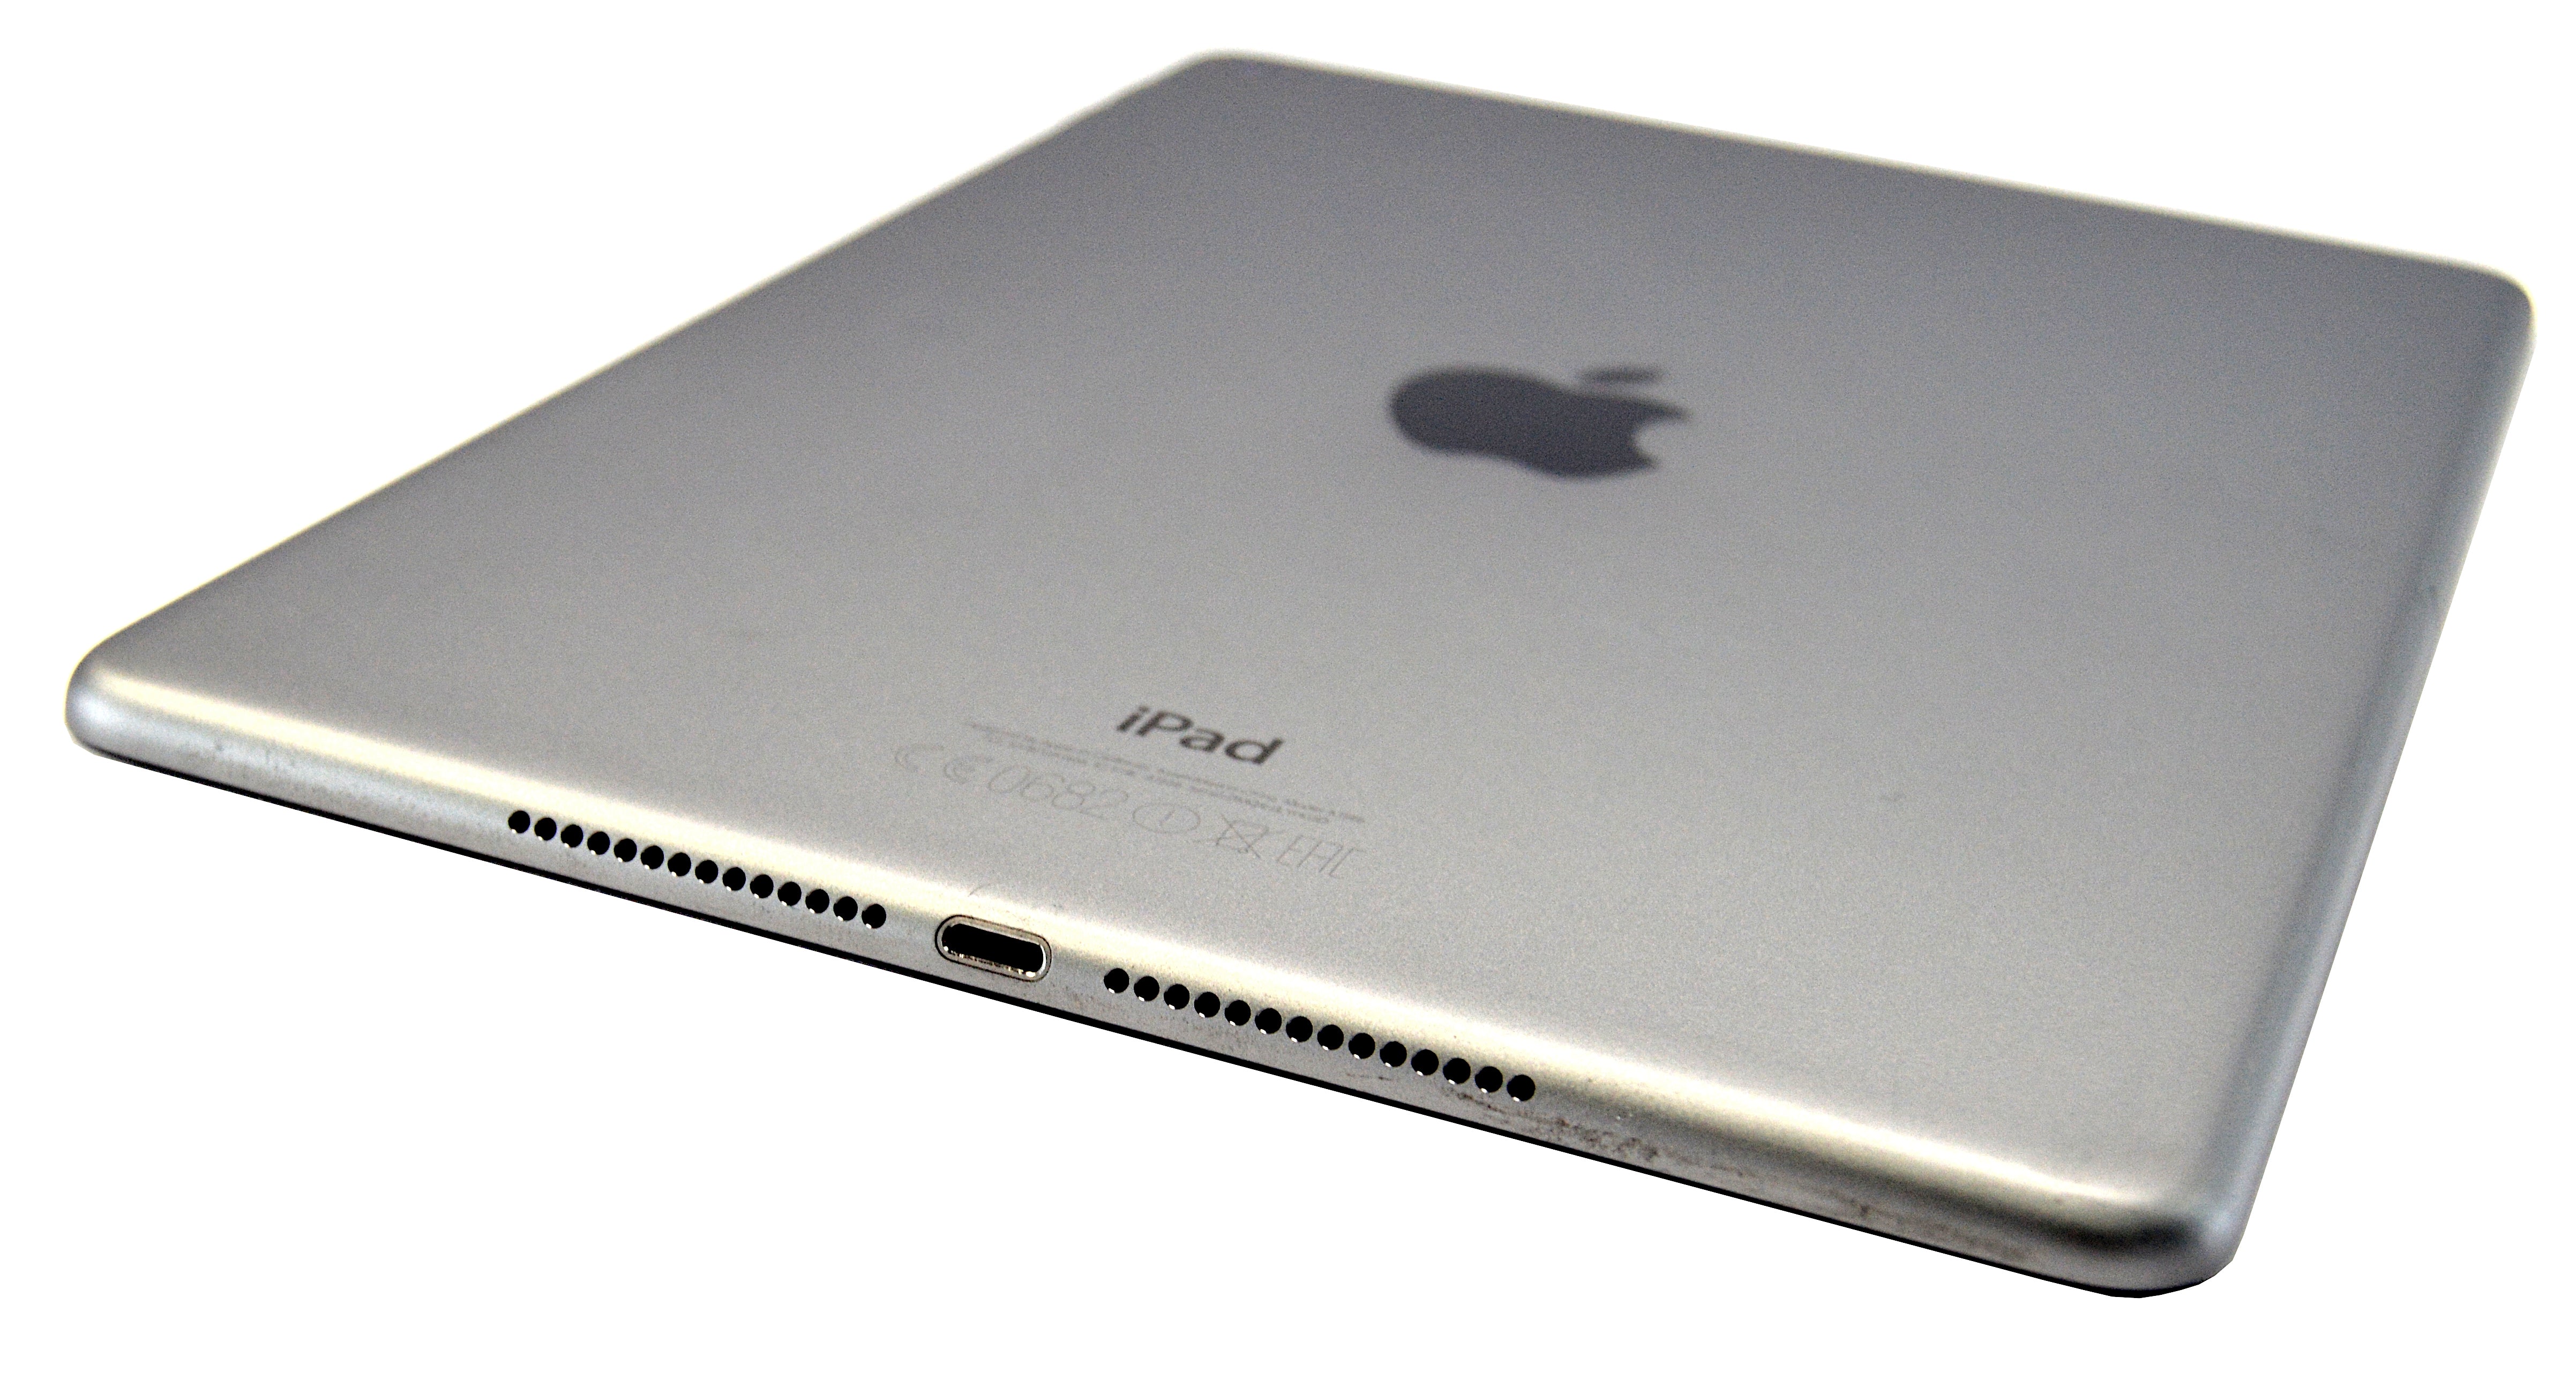 Apple iPad Air 2 Tablet, 128GB, WiFi, Space Gray, A1566